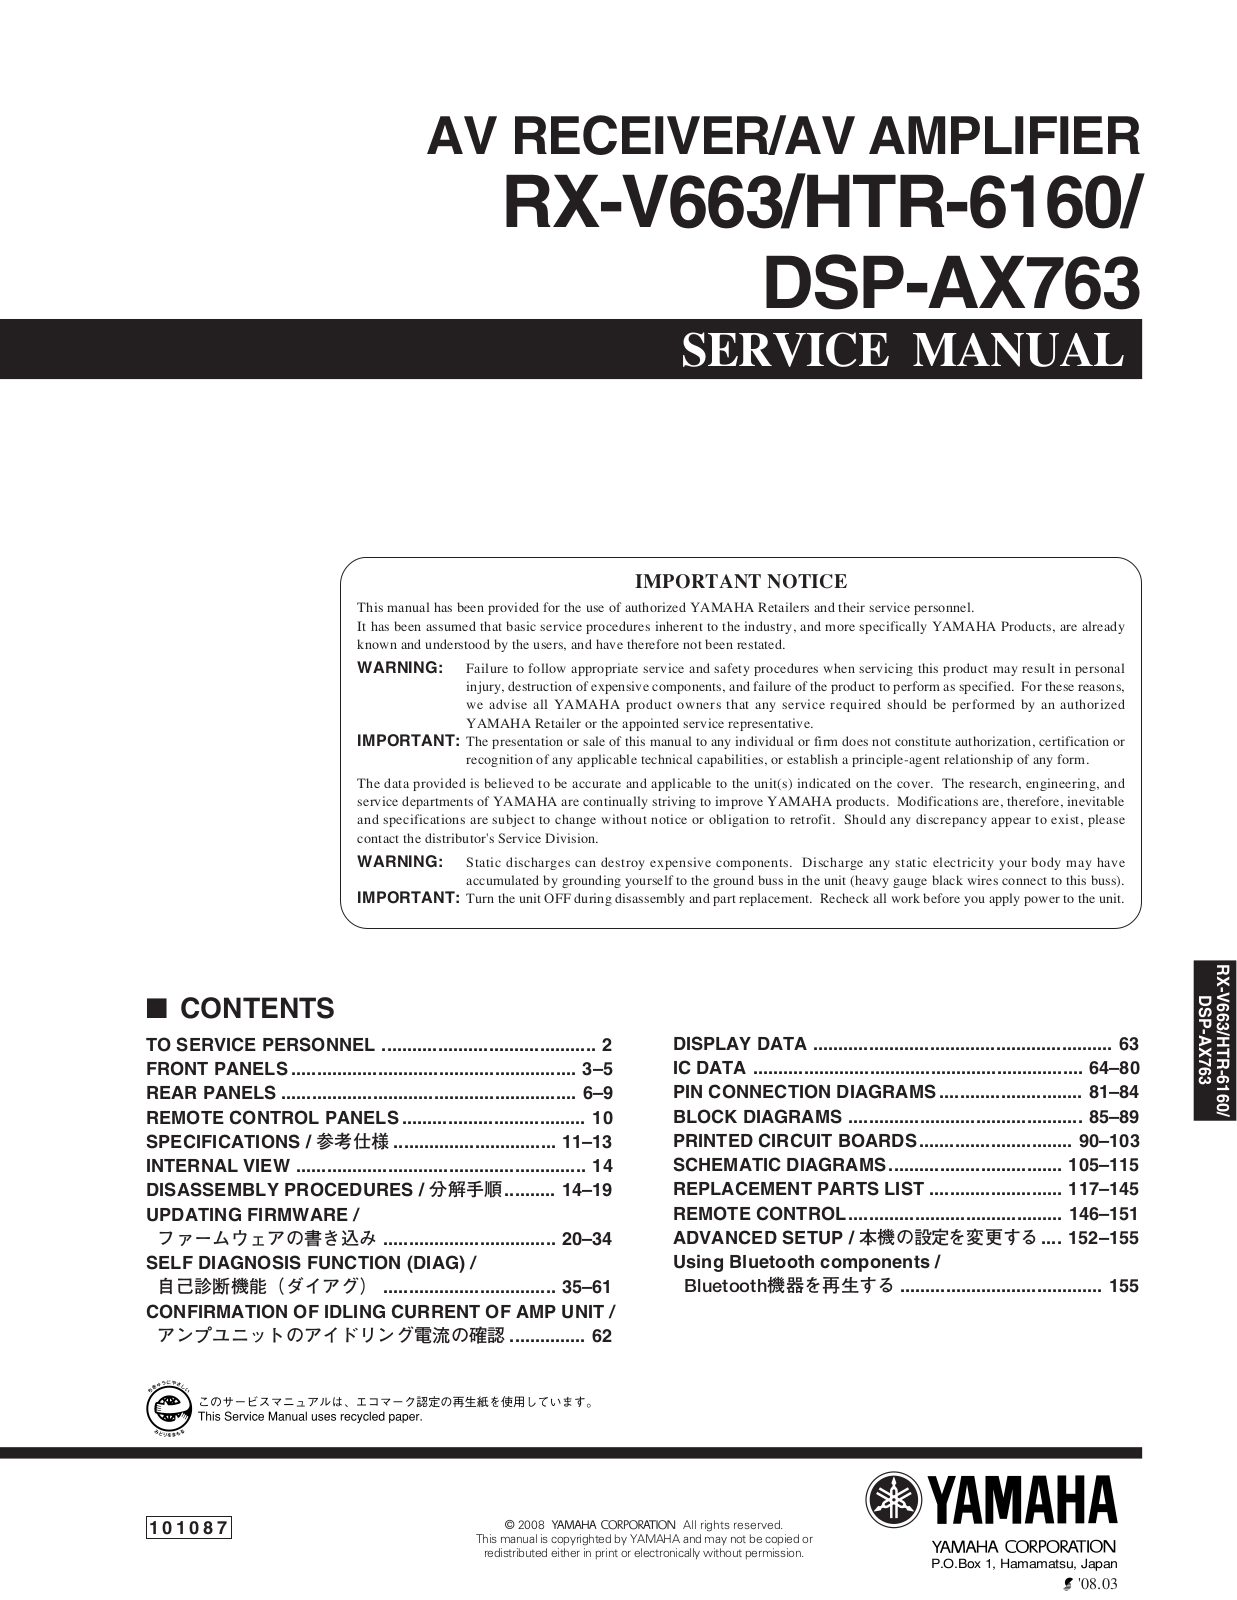 Yamaha RXV-663, DSPAX-763, HTR-6160 Service manual